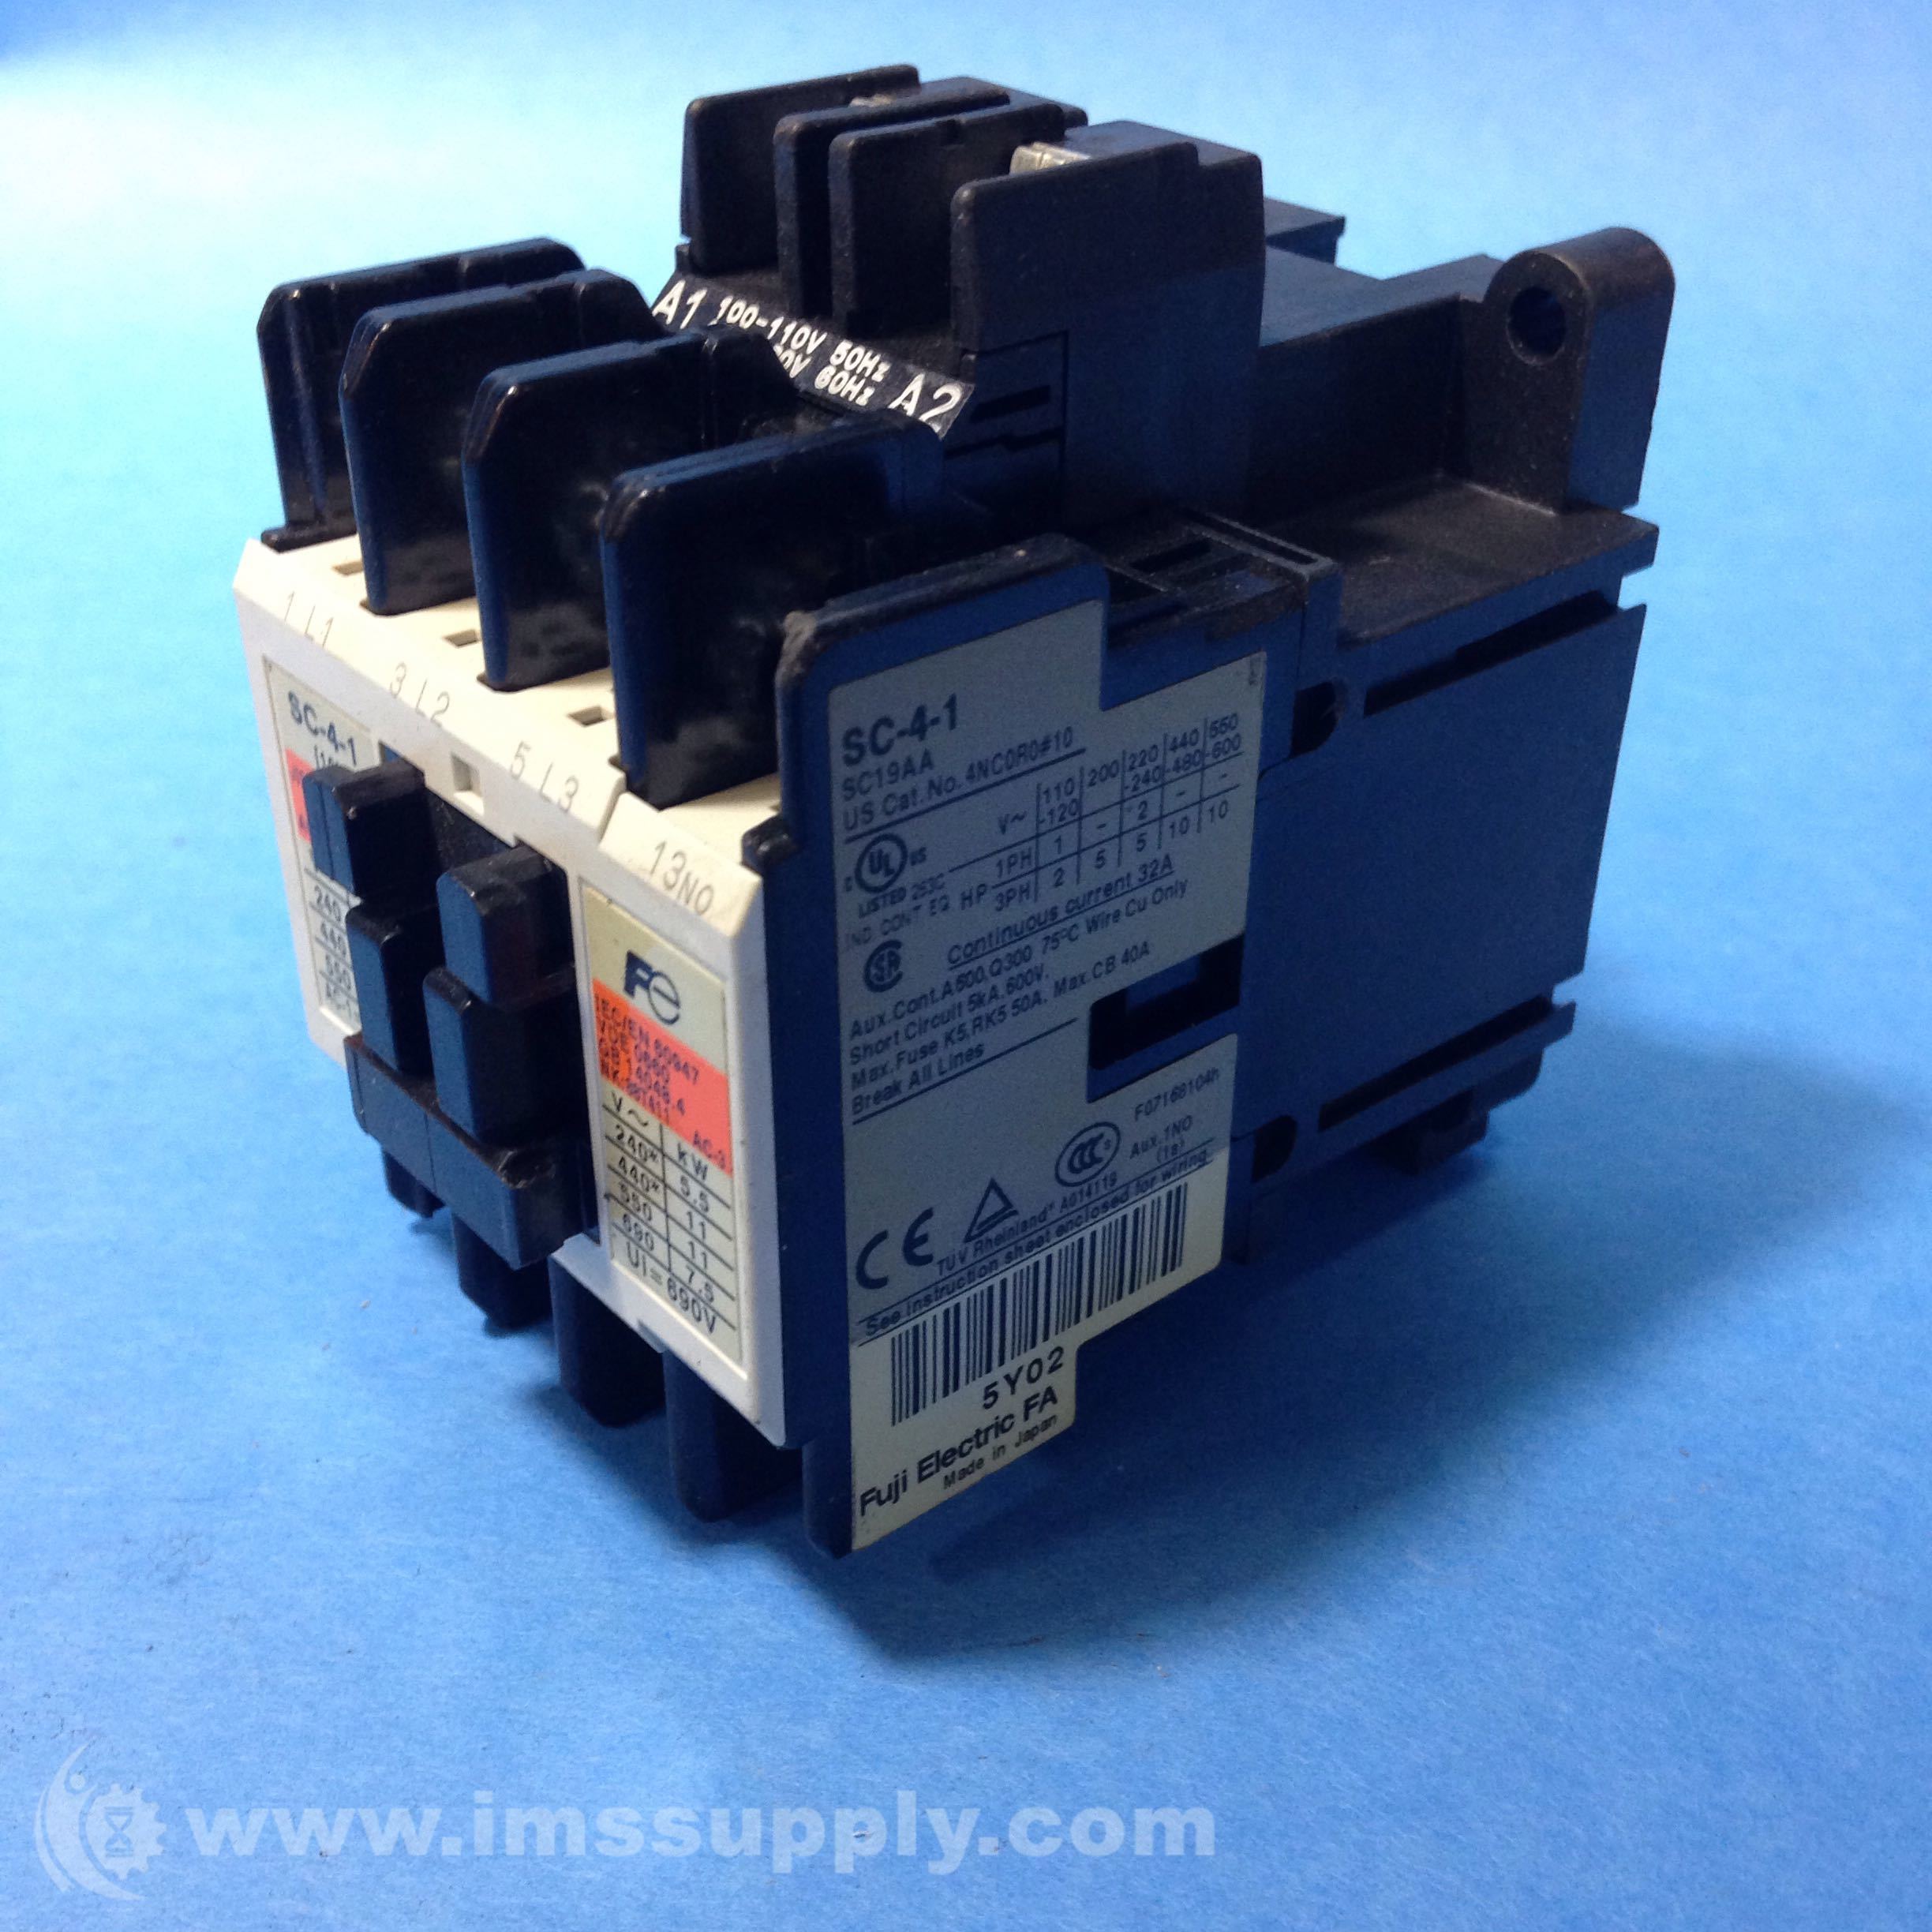 Fuji Electric SC-4-1 Magnetic Contactor 5KA 600V 32A  Missing Hardware 